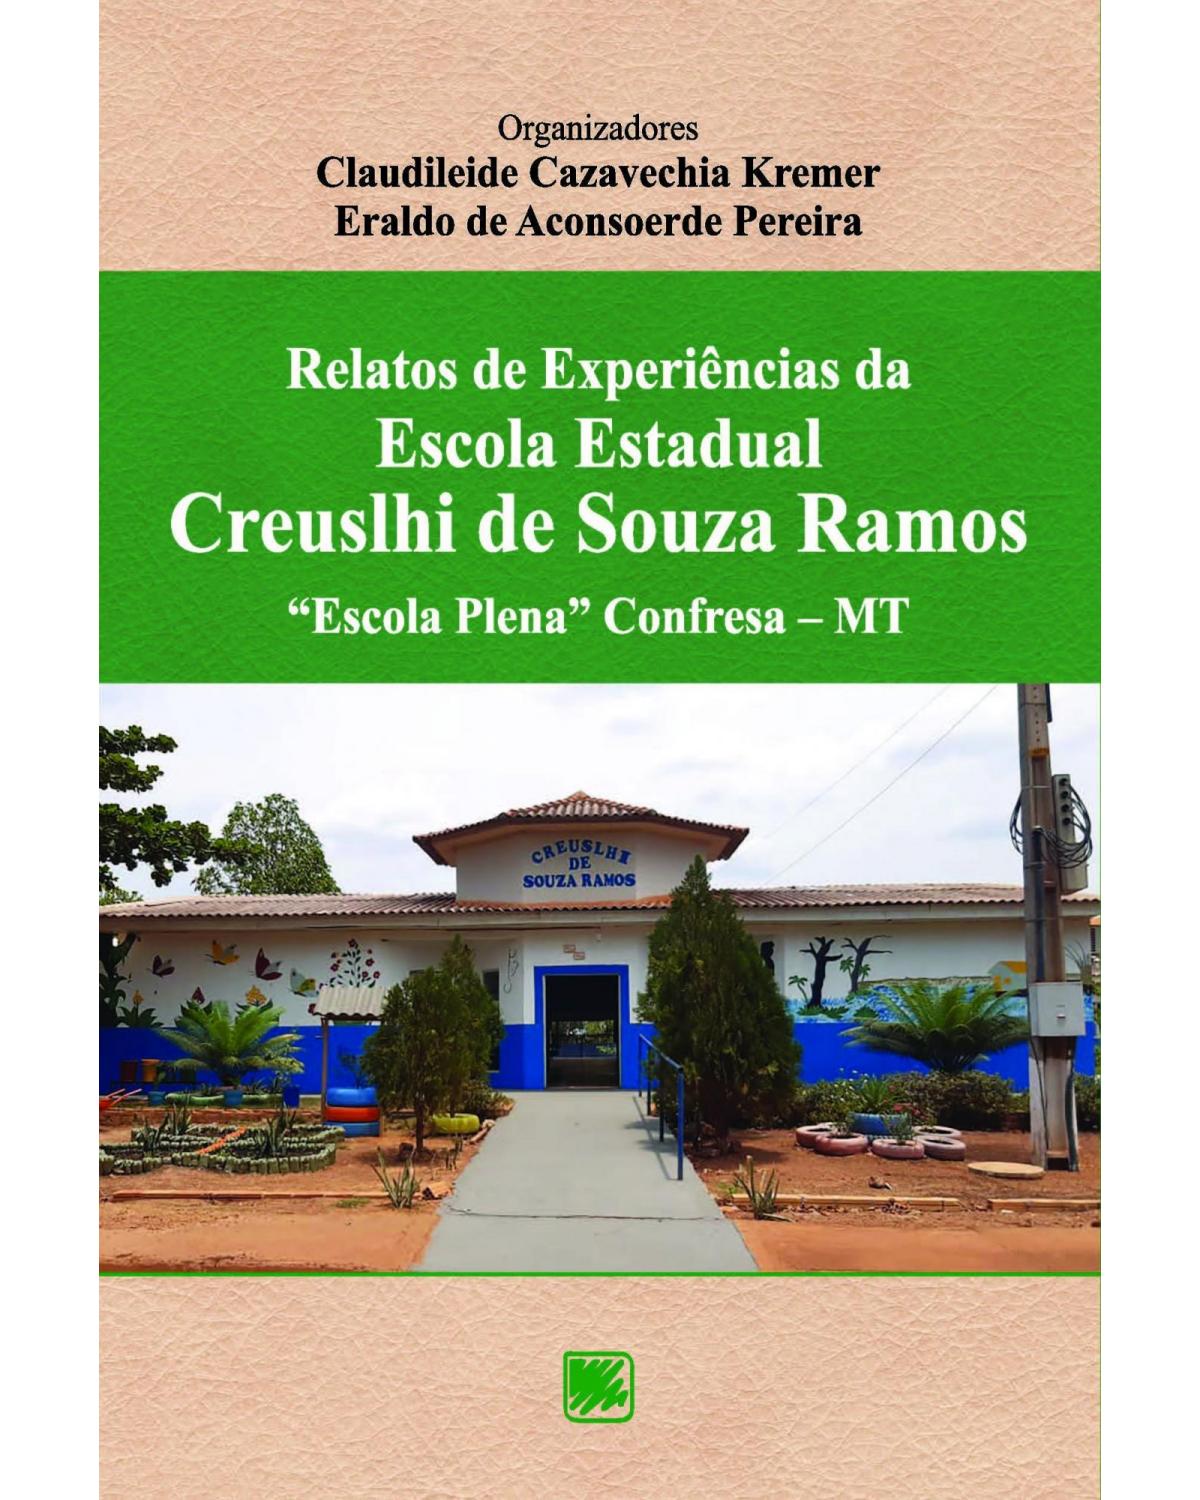 Relatos de experiências da Escola Estadual Creuslhi de Souza Ramos - 